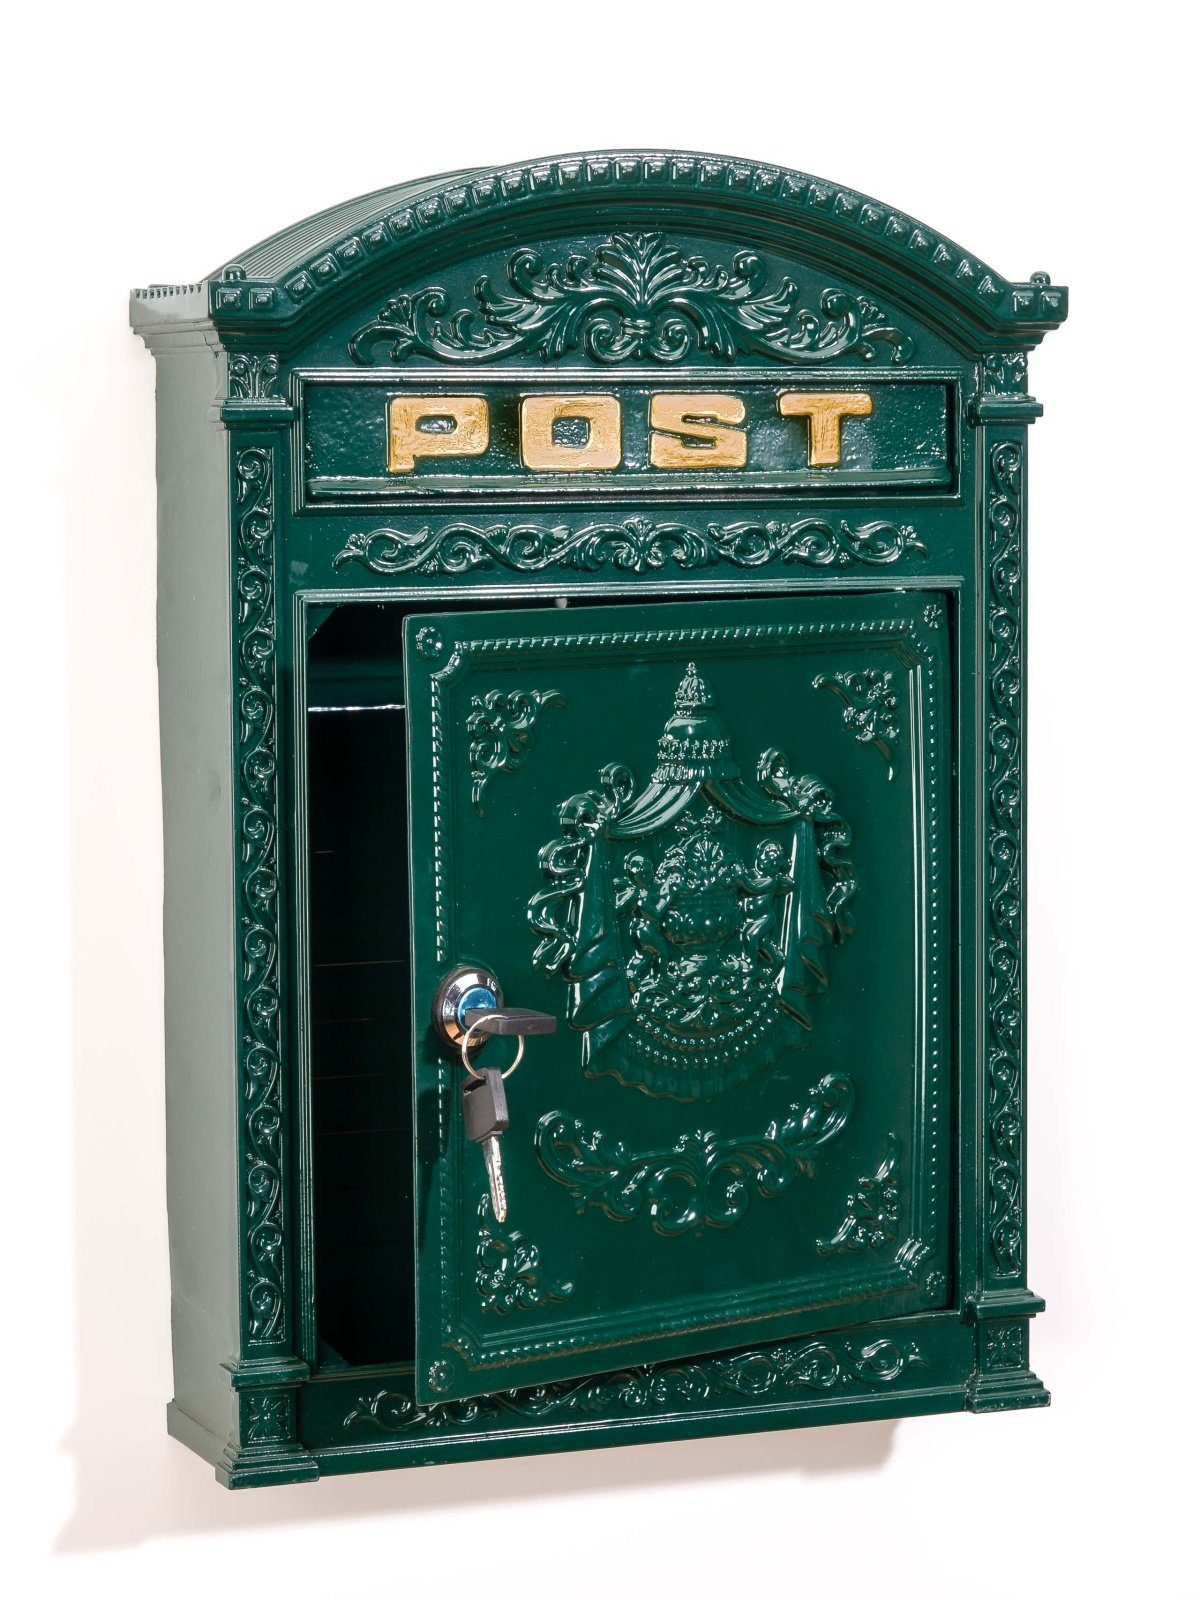 Aubaho Wandbriefkasten Briefkasten Wandbriefkasten Alu Nostalgie Postkasten grün antik Stil l